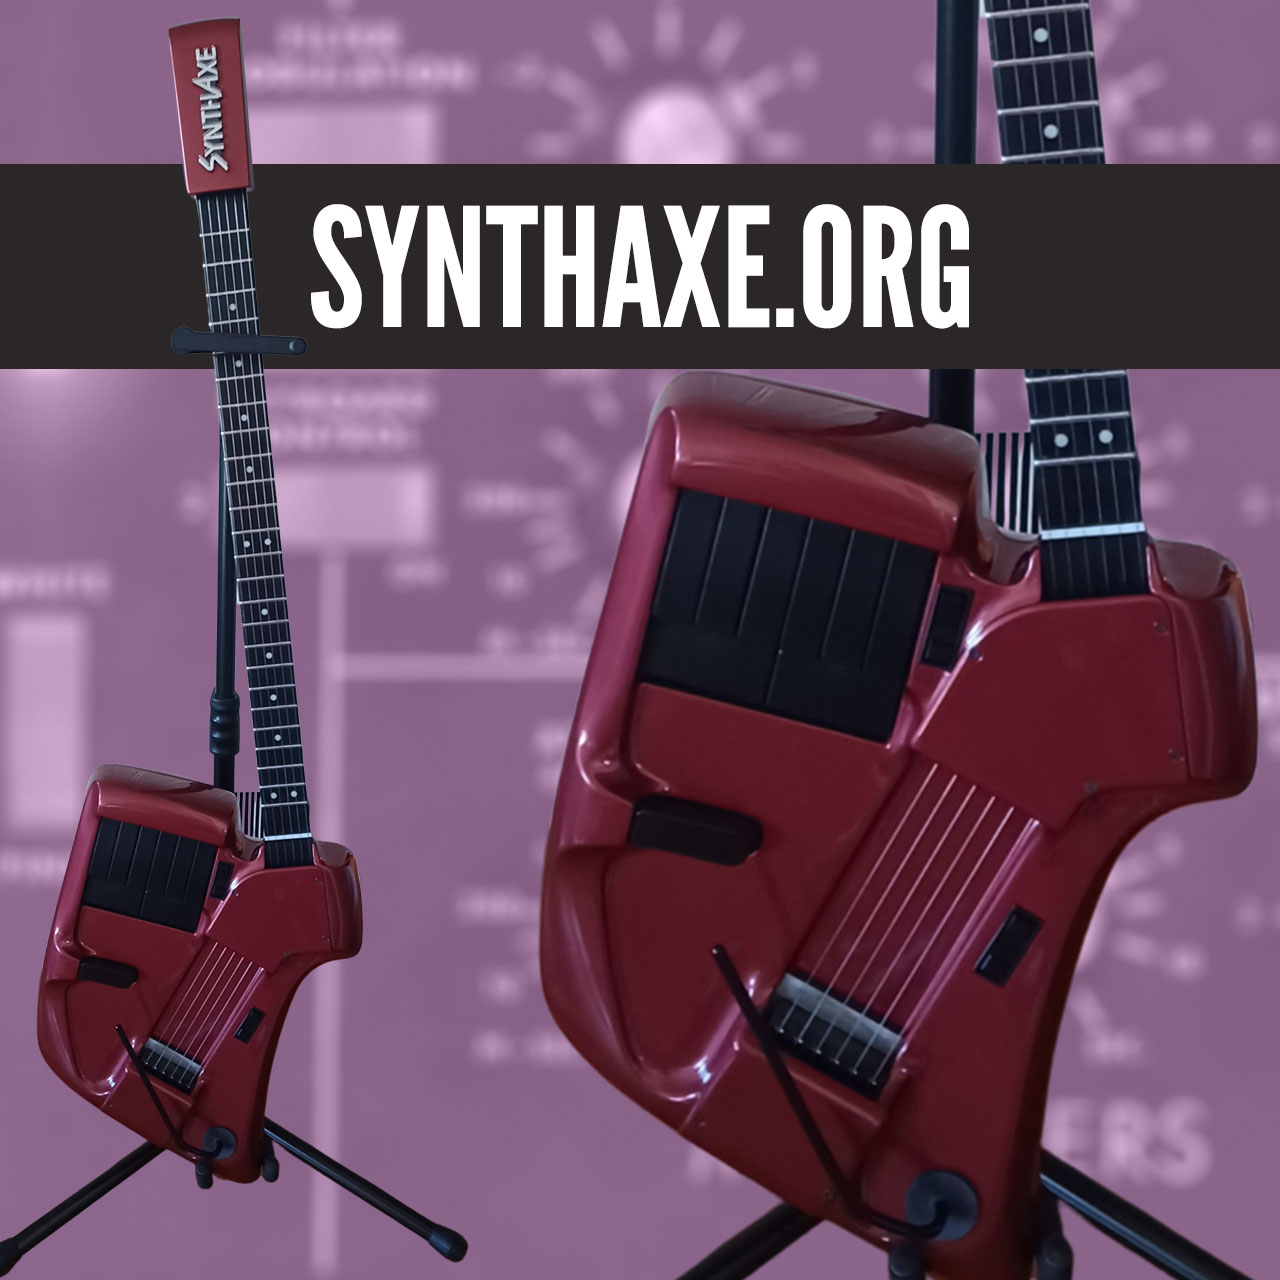 Synthaxe